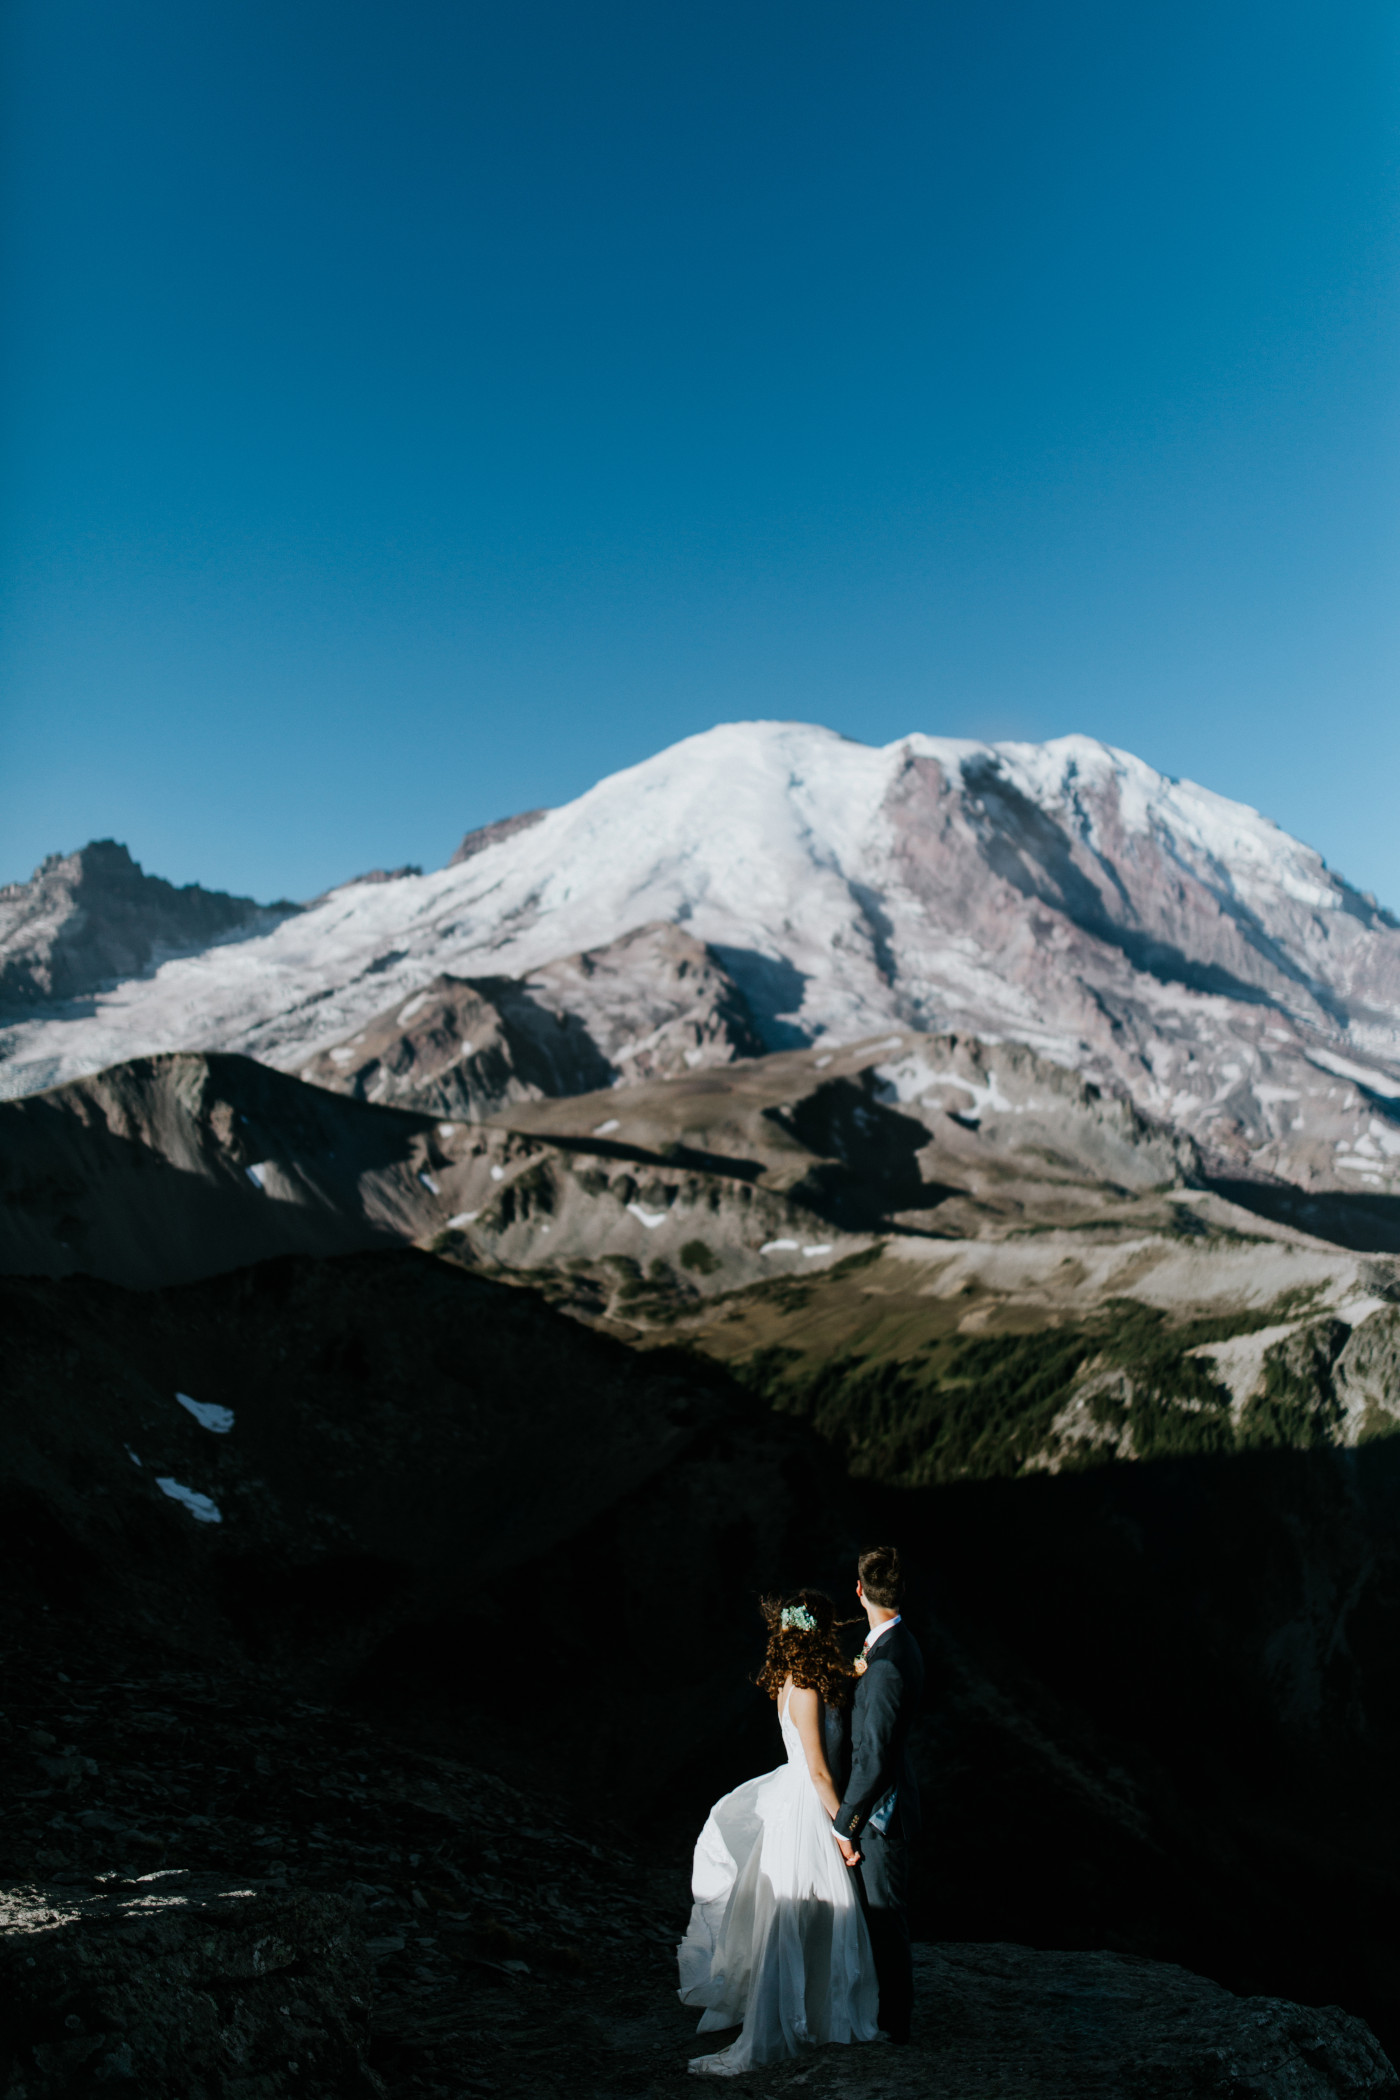 Chad and Tasha look at Mount Rainier. Elopement photography at Mount Rainier by Sienna Plus Josh.